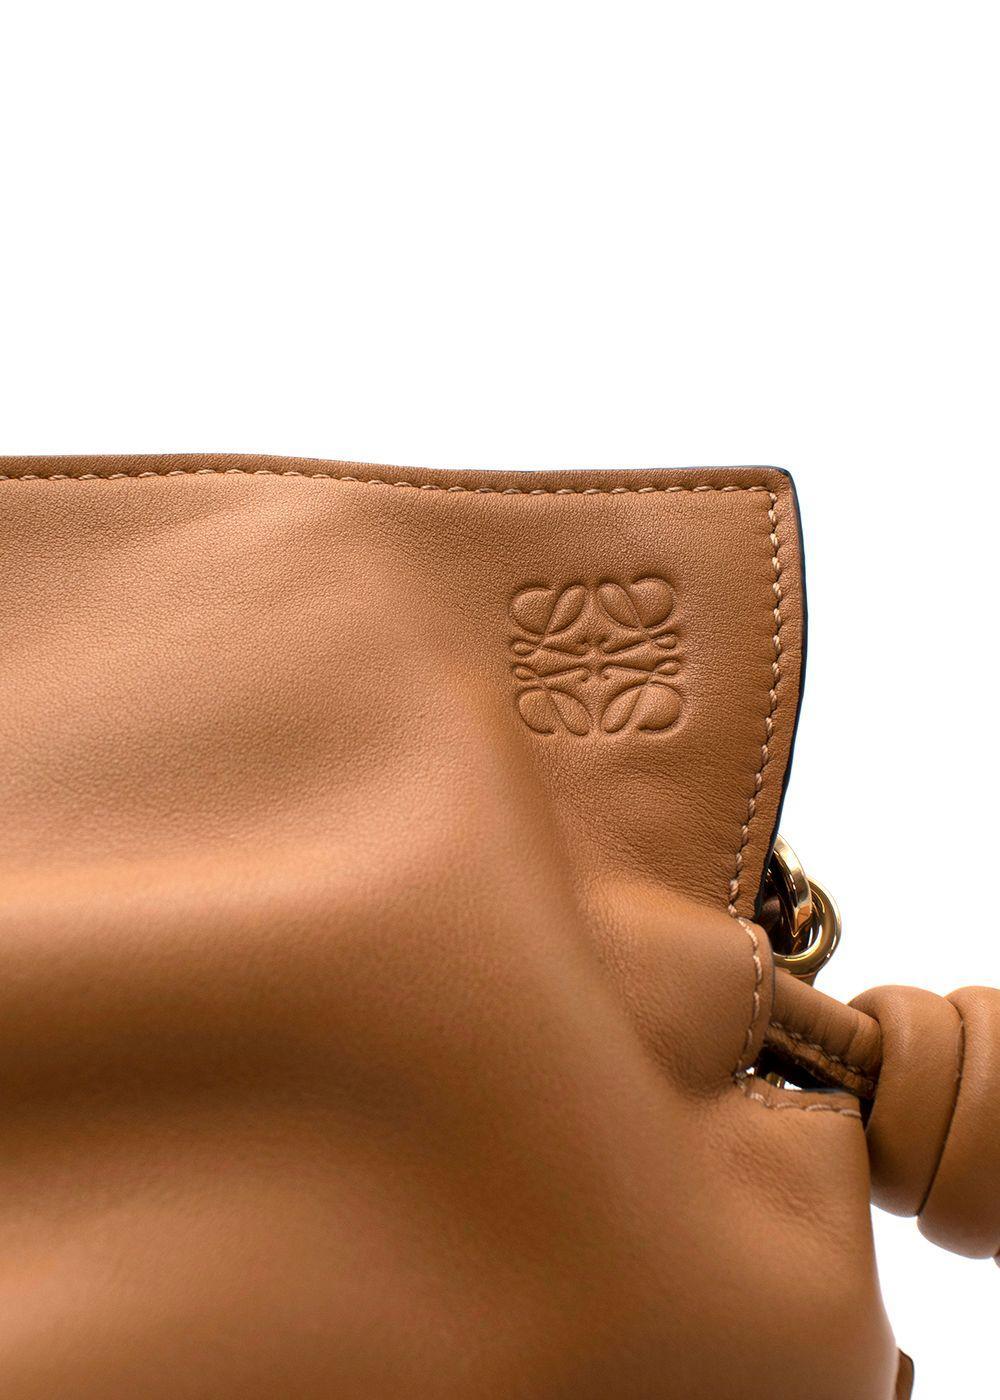 Loewe Tan Brown Leather Mini Flamenco Knot Clutch Bag For Sale 1